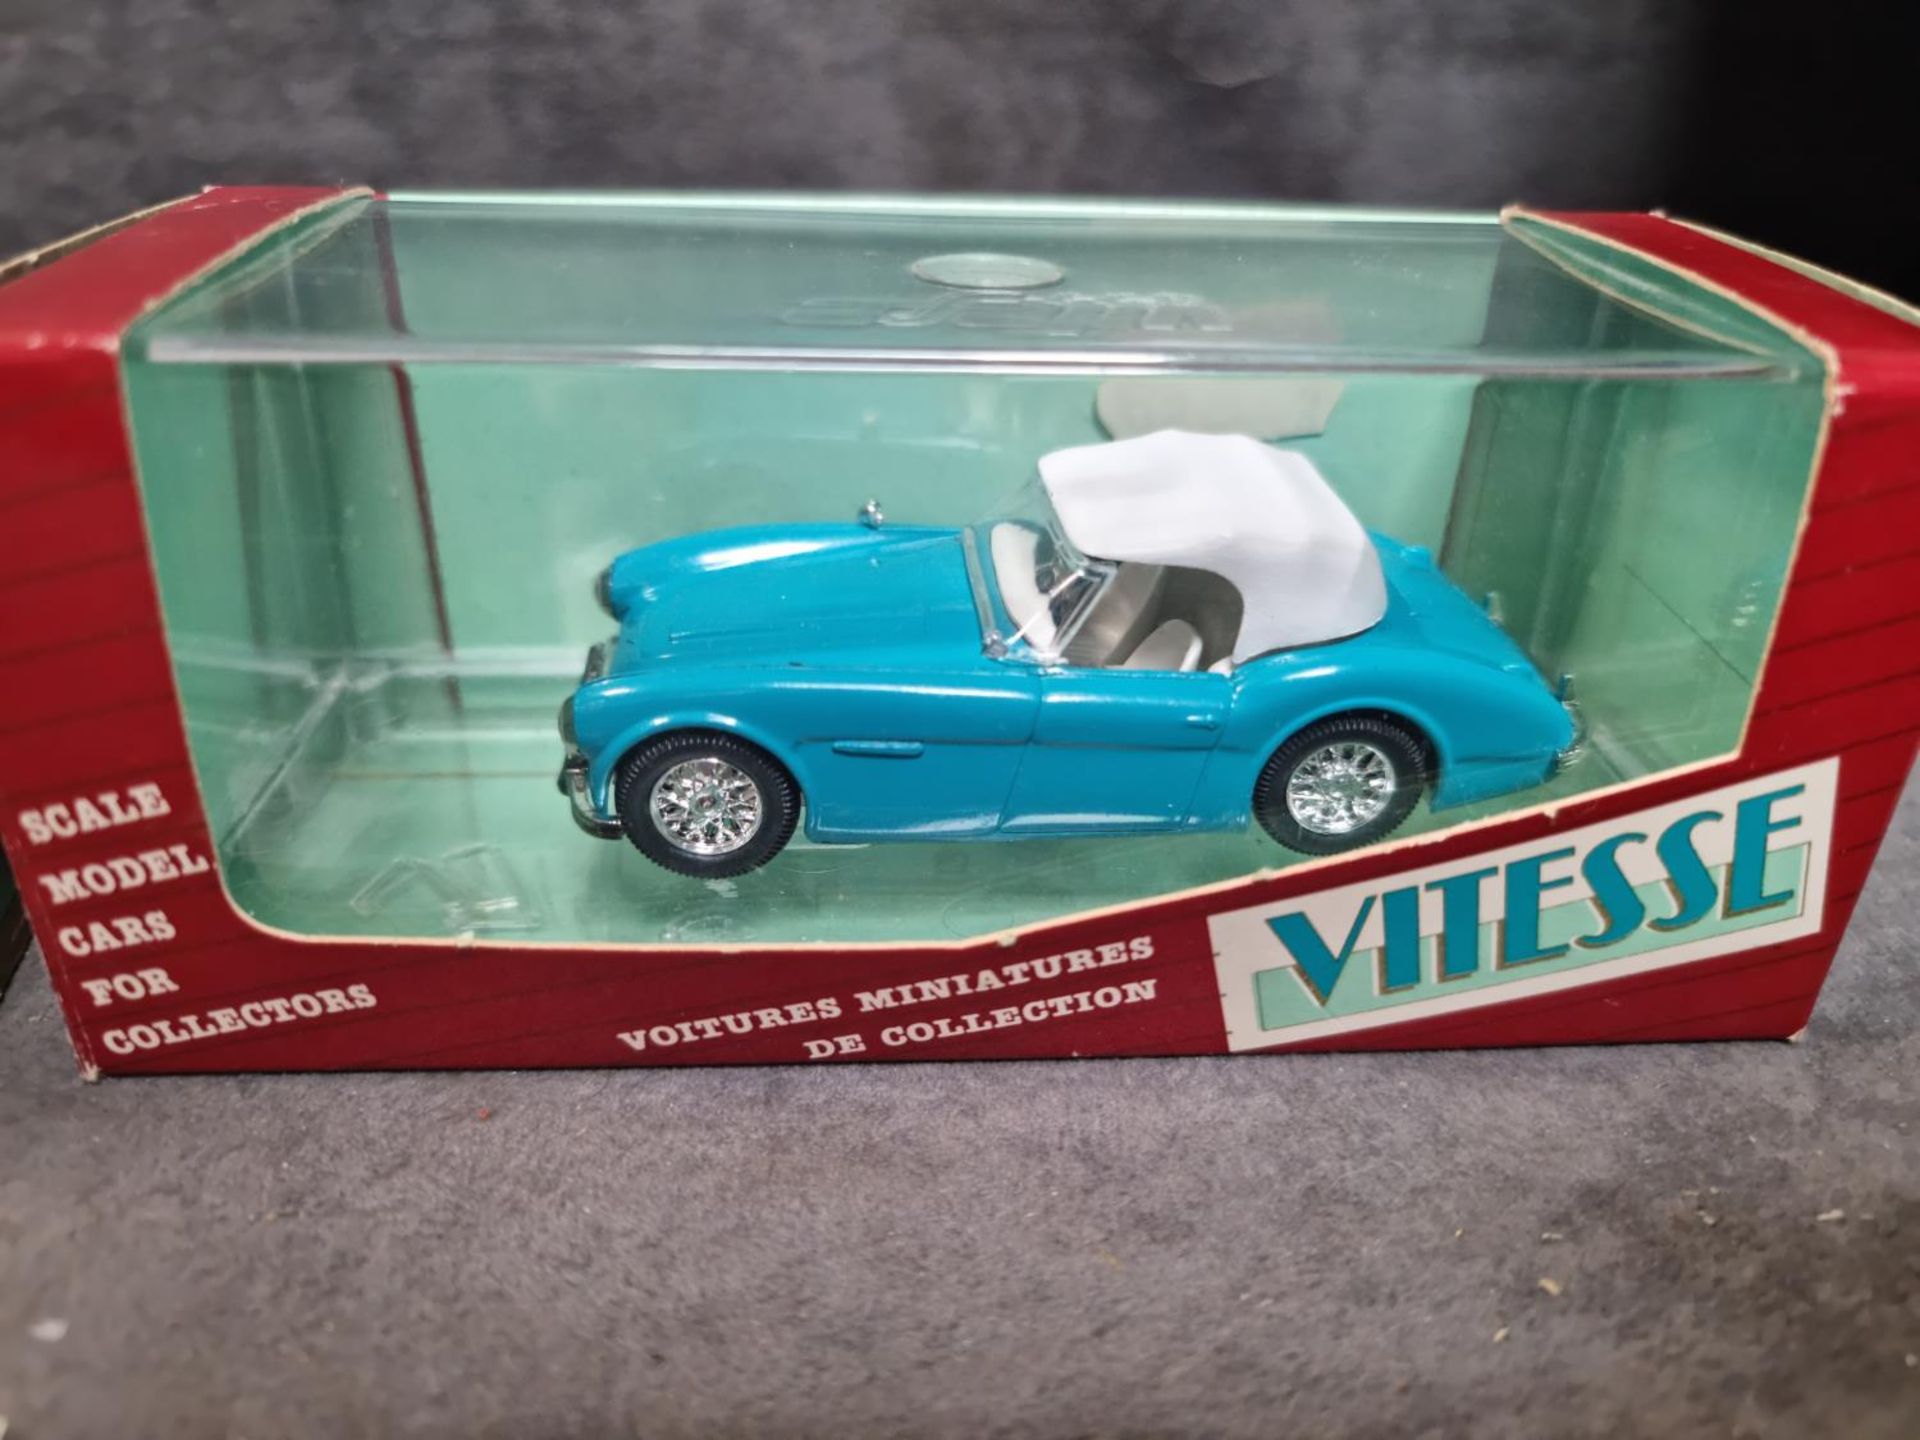 2 x Vitesse Models #173 1/43 Scale 173 - Austin Healey 3000 Closed Cabrio - Met Lgt. Blue/White # - Image 3 of 3